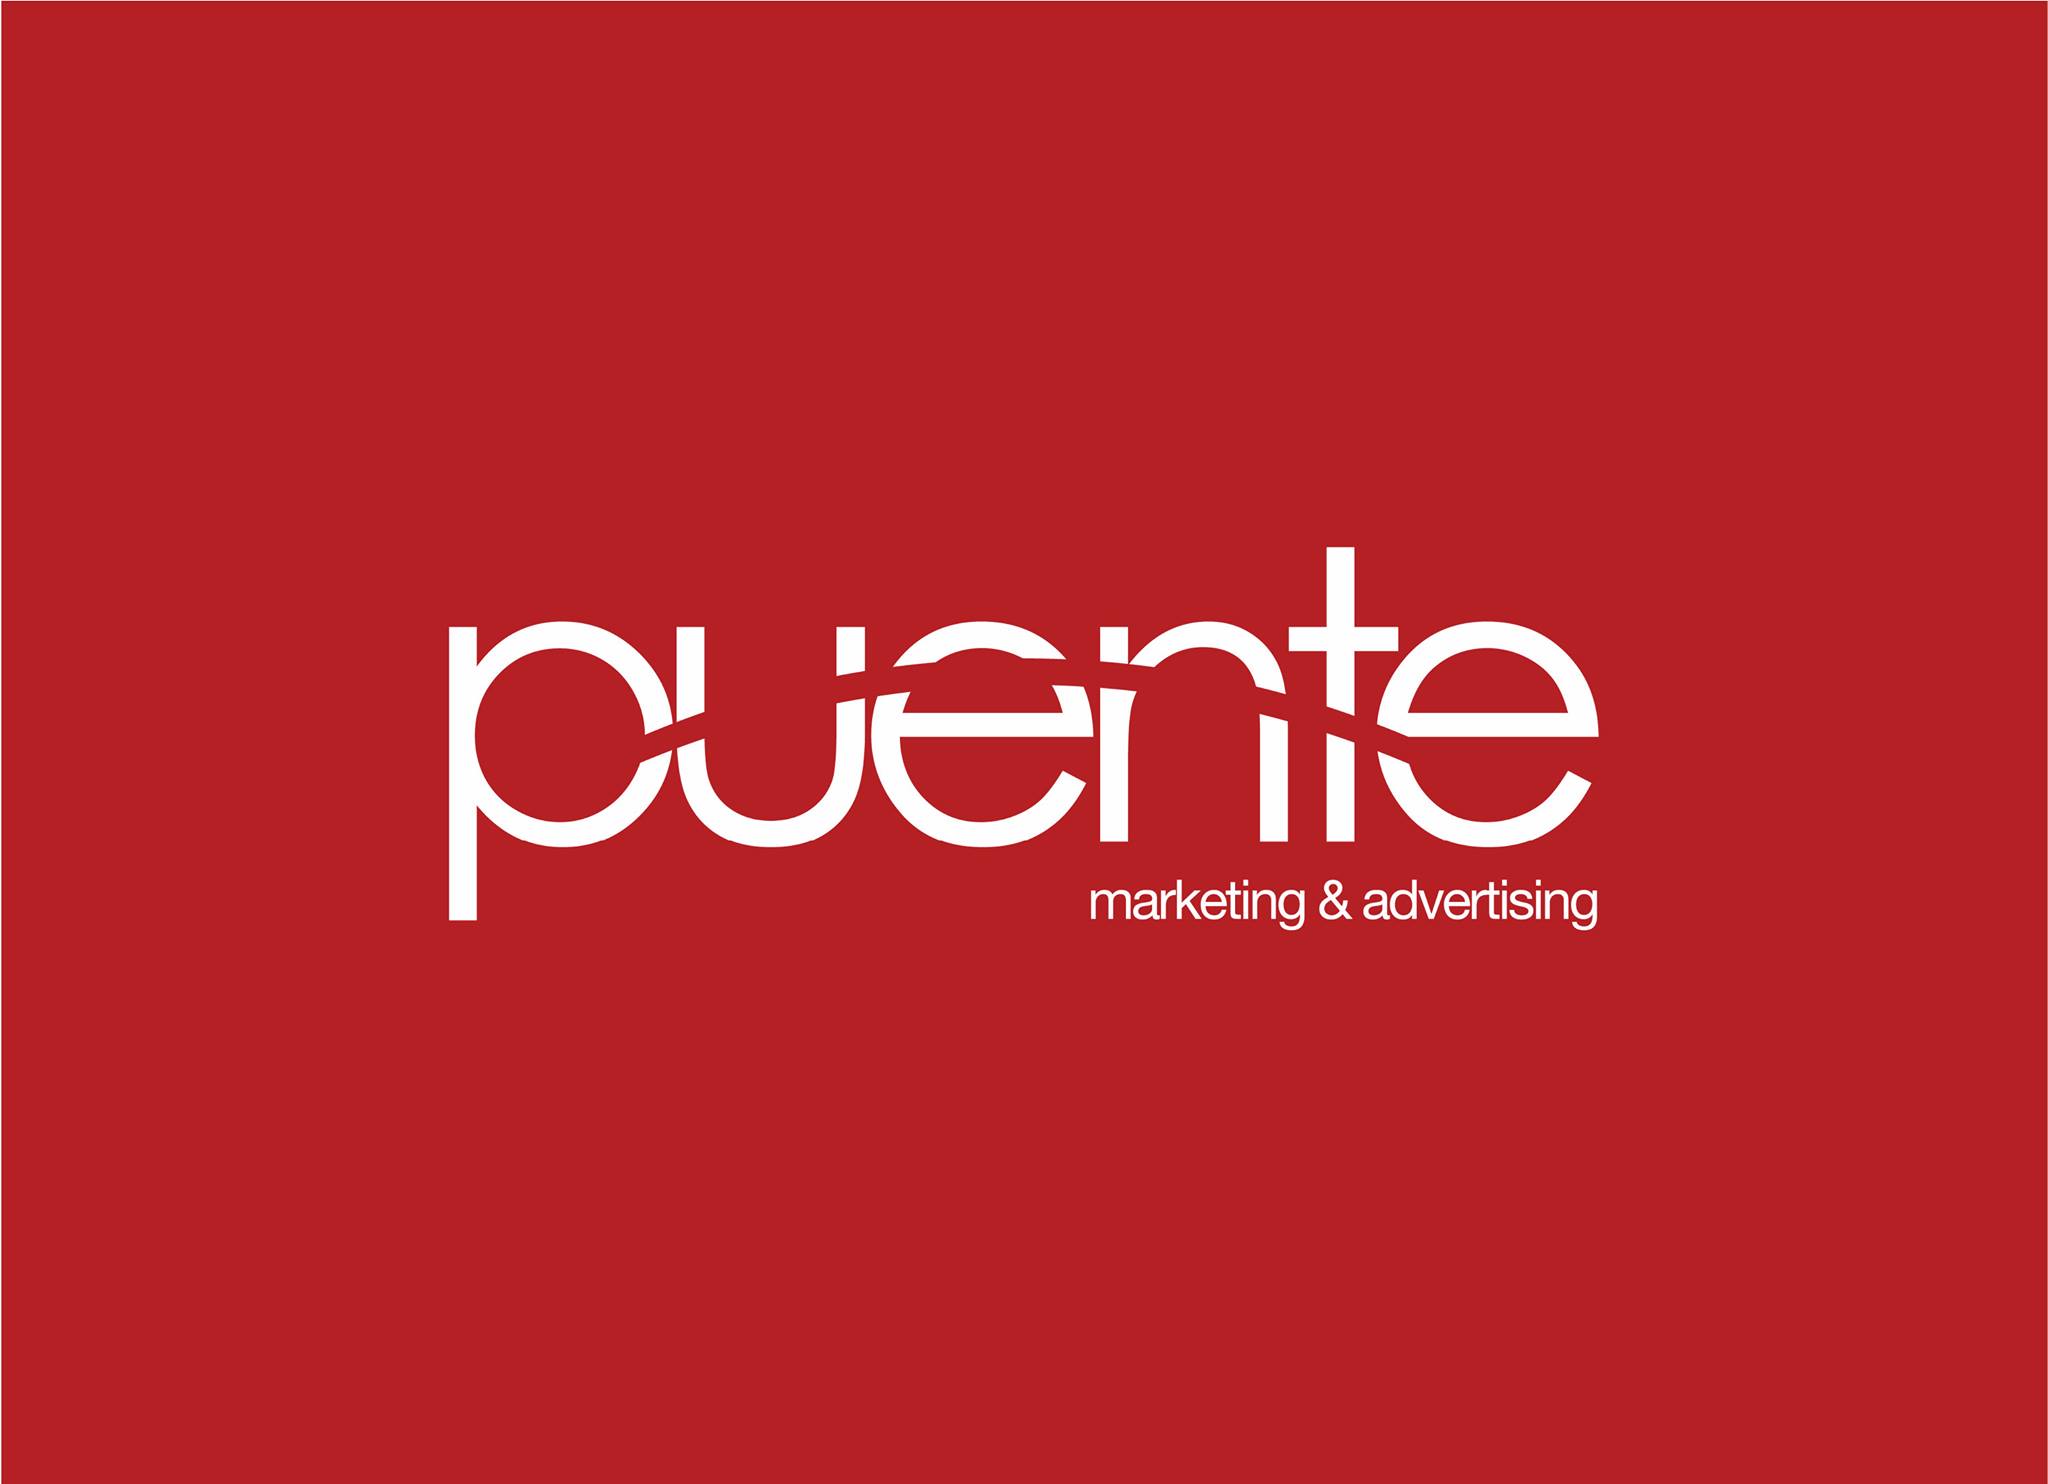 Puente Marketing & Advertising